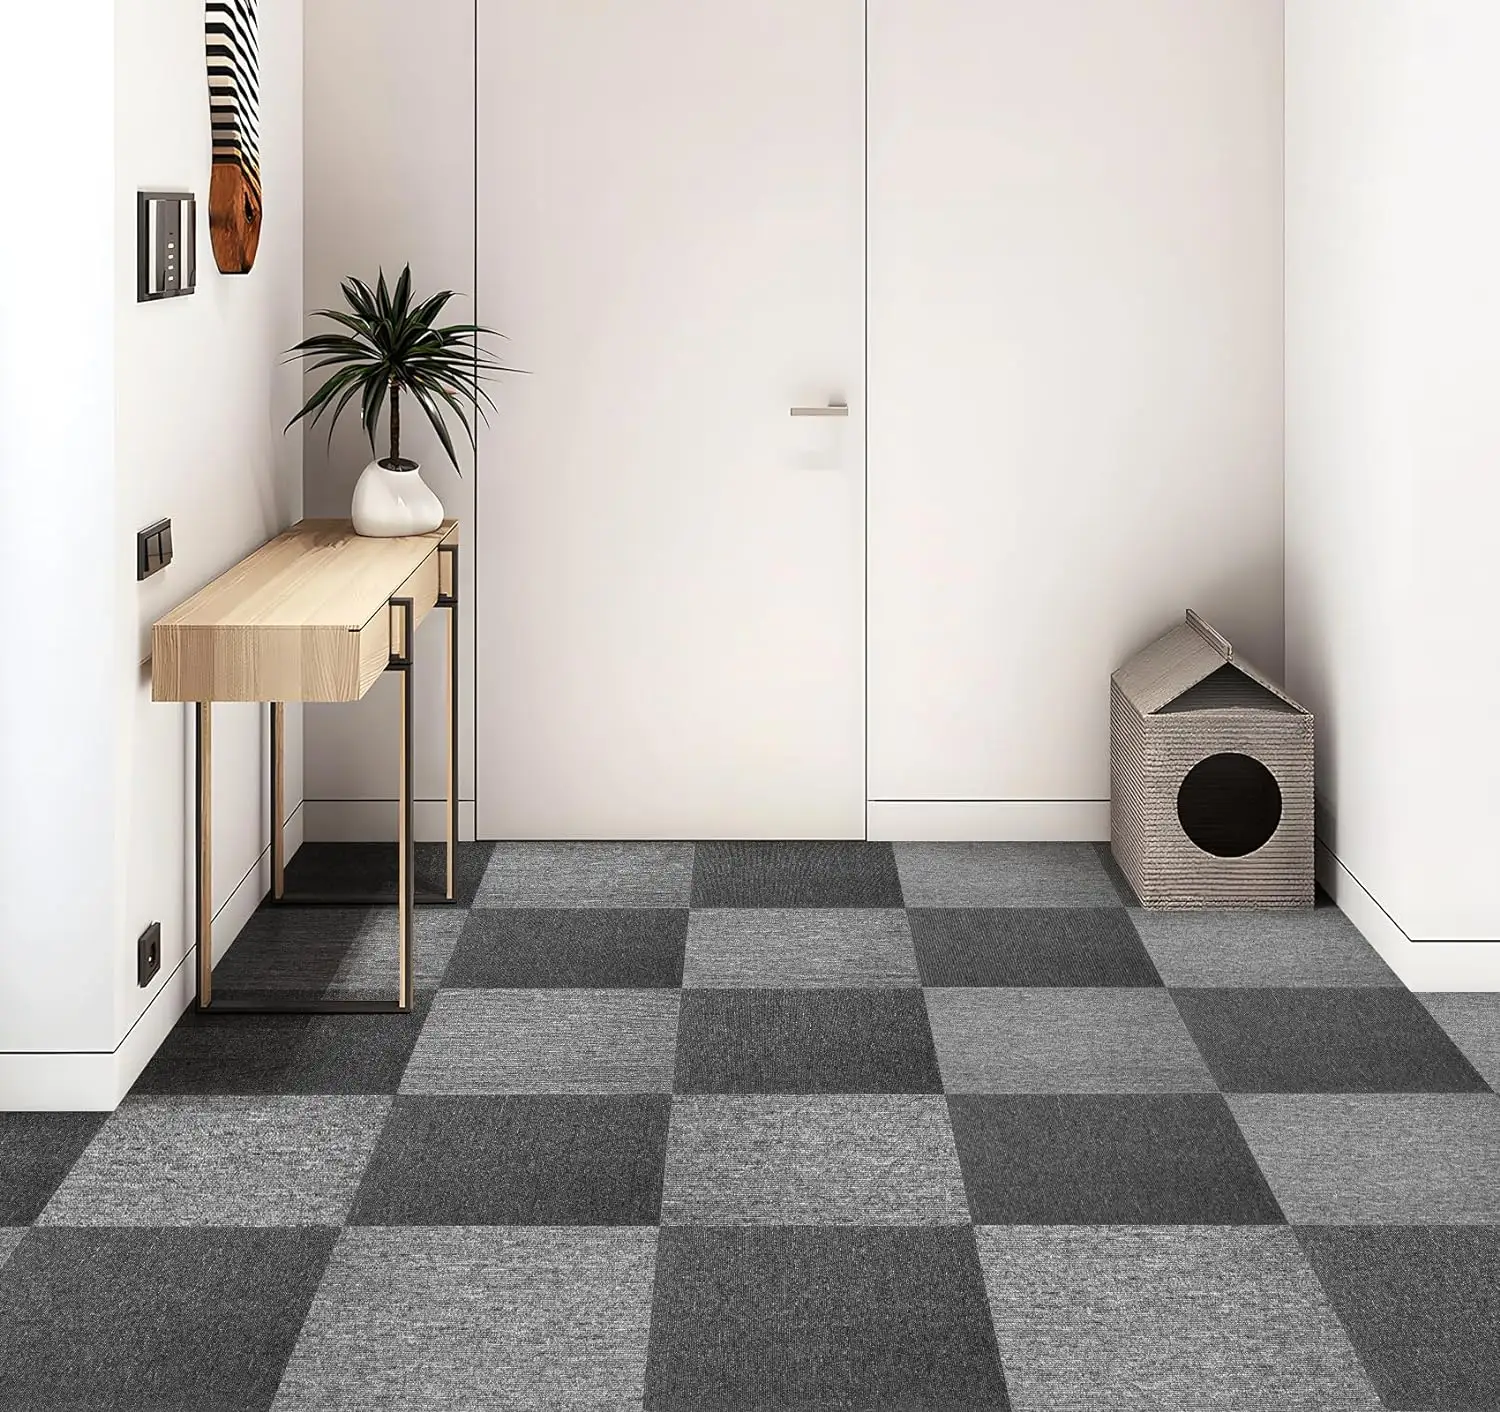 Hot sale Popular Design Commercial Office indoor carpet squares tiles 50x50 PP Polypropylene Flooring China Factory Wholesale